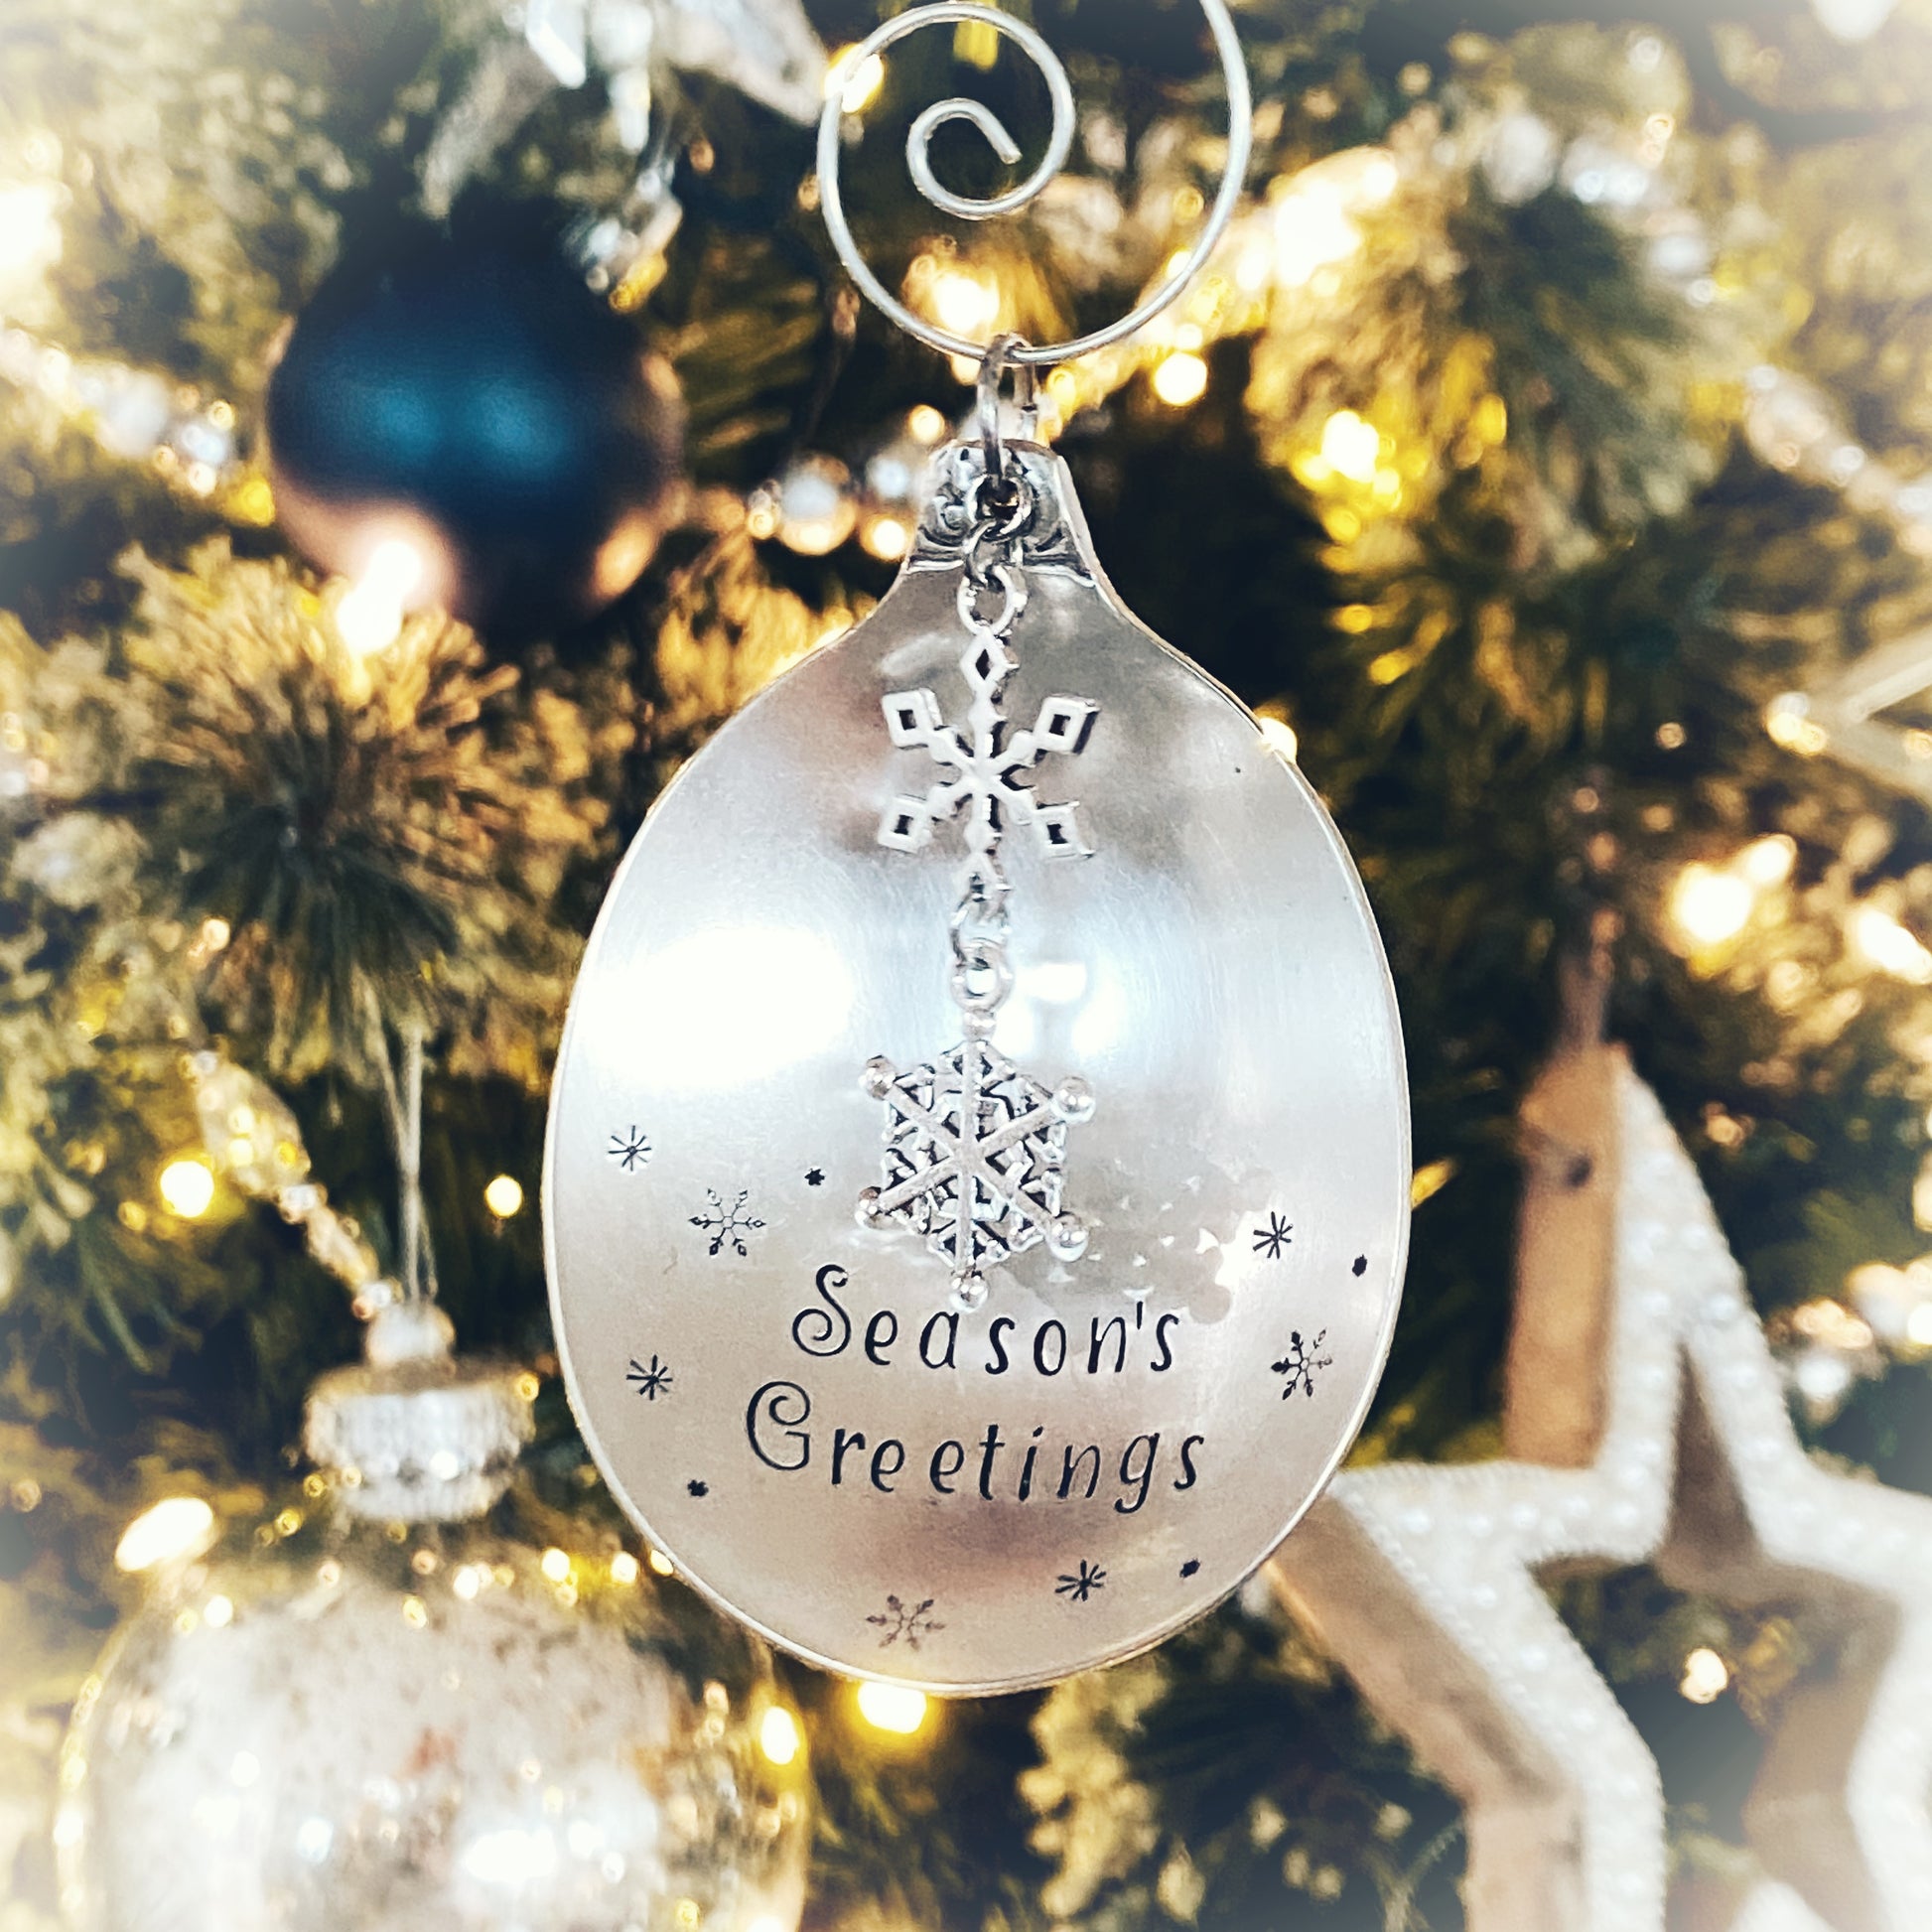 Season's Greetings, Spoon Bowl Ornament, Hand Stamped Vintage Spoon Ornament, Snowflake Ornament Ornaments callistafaye   